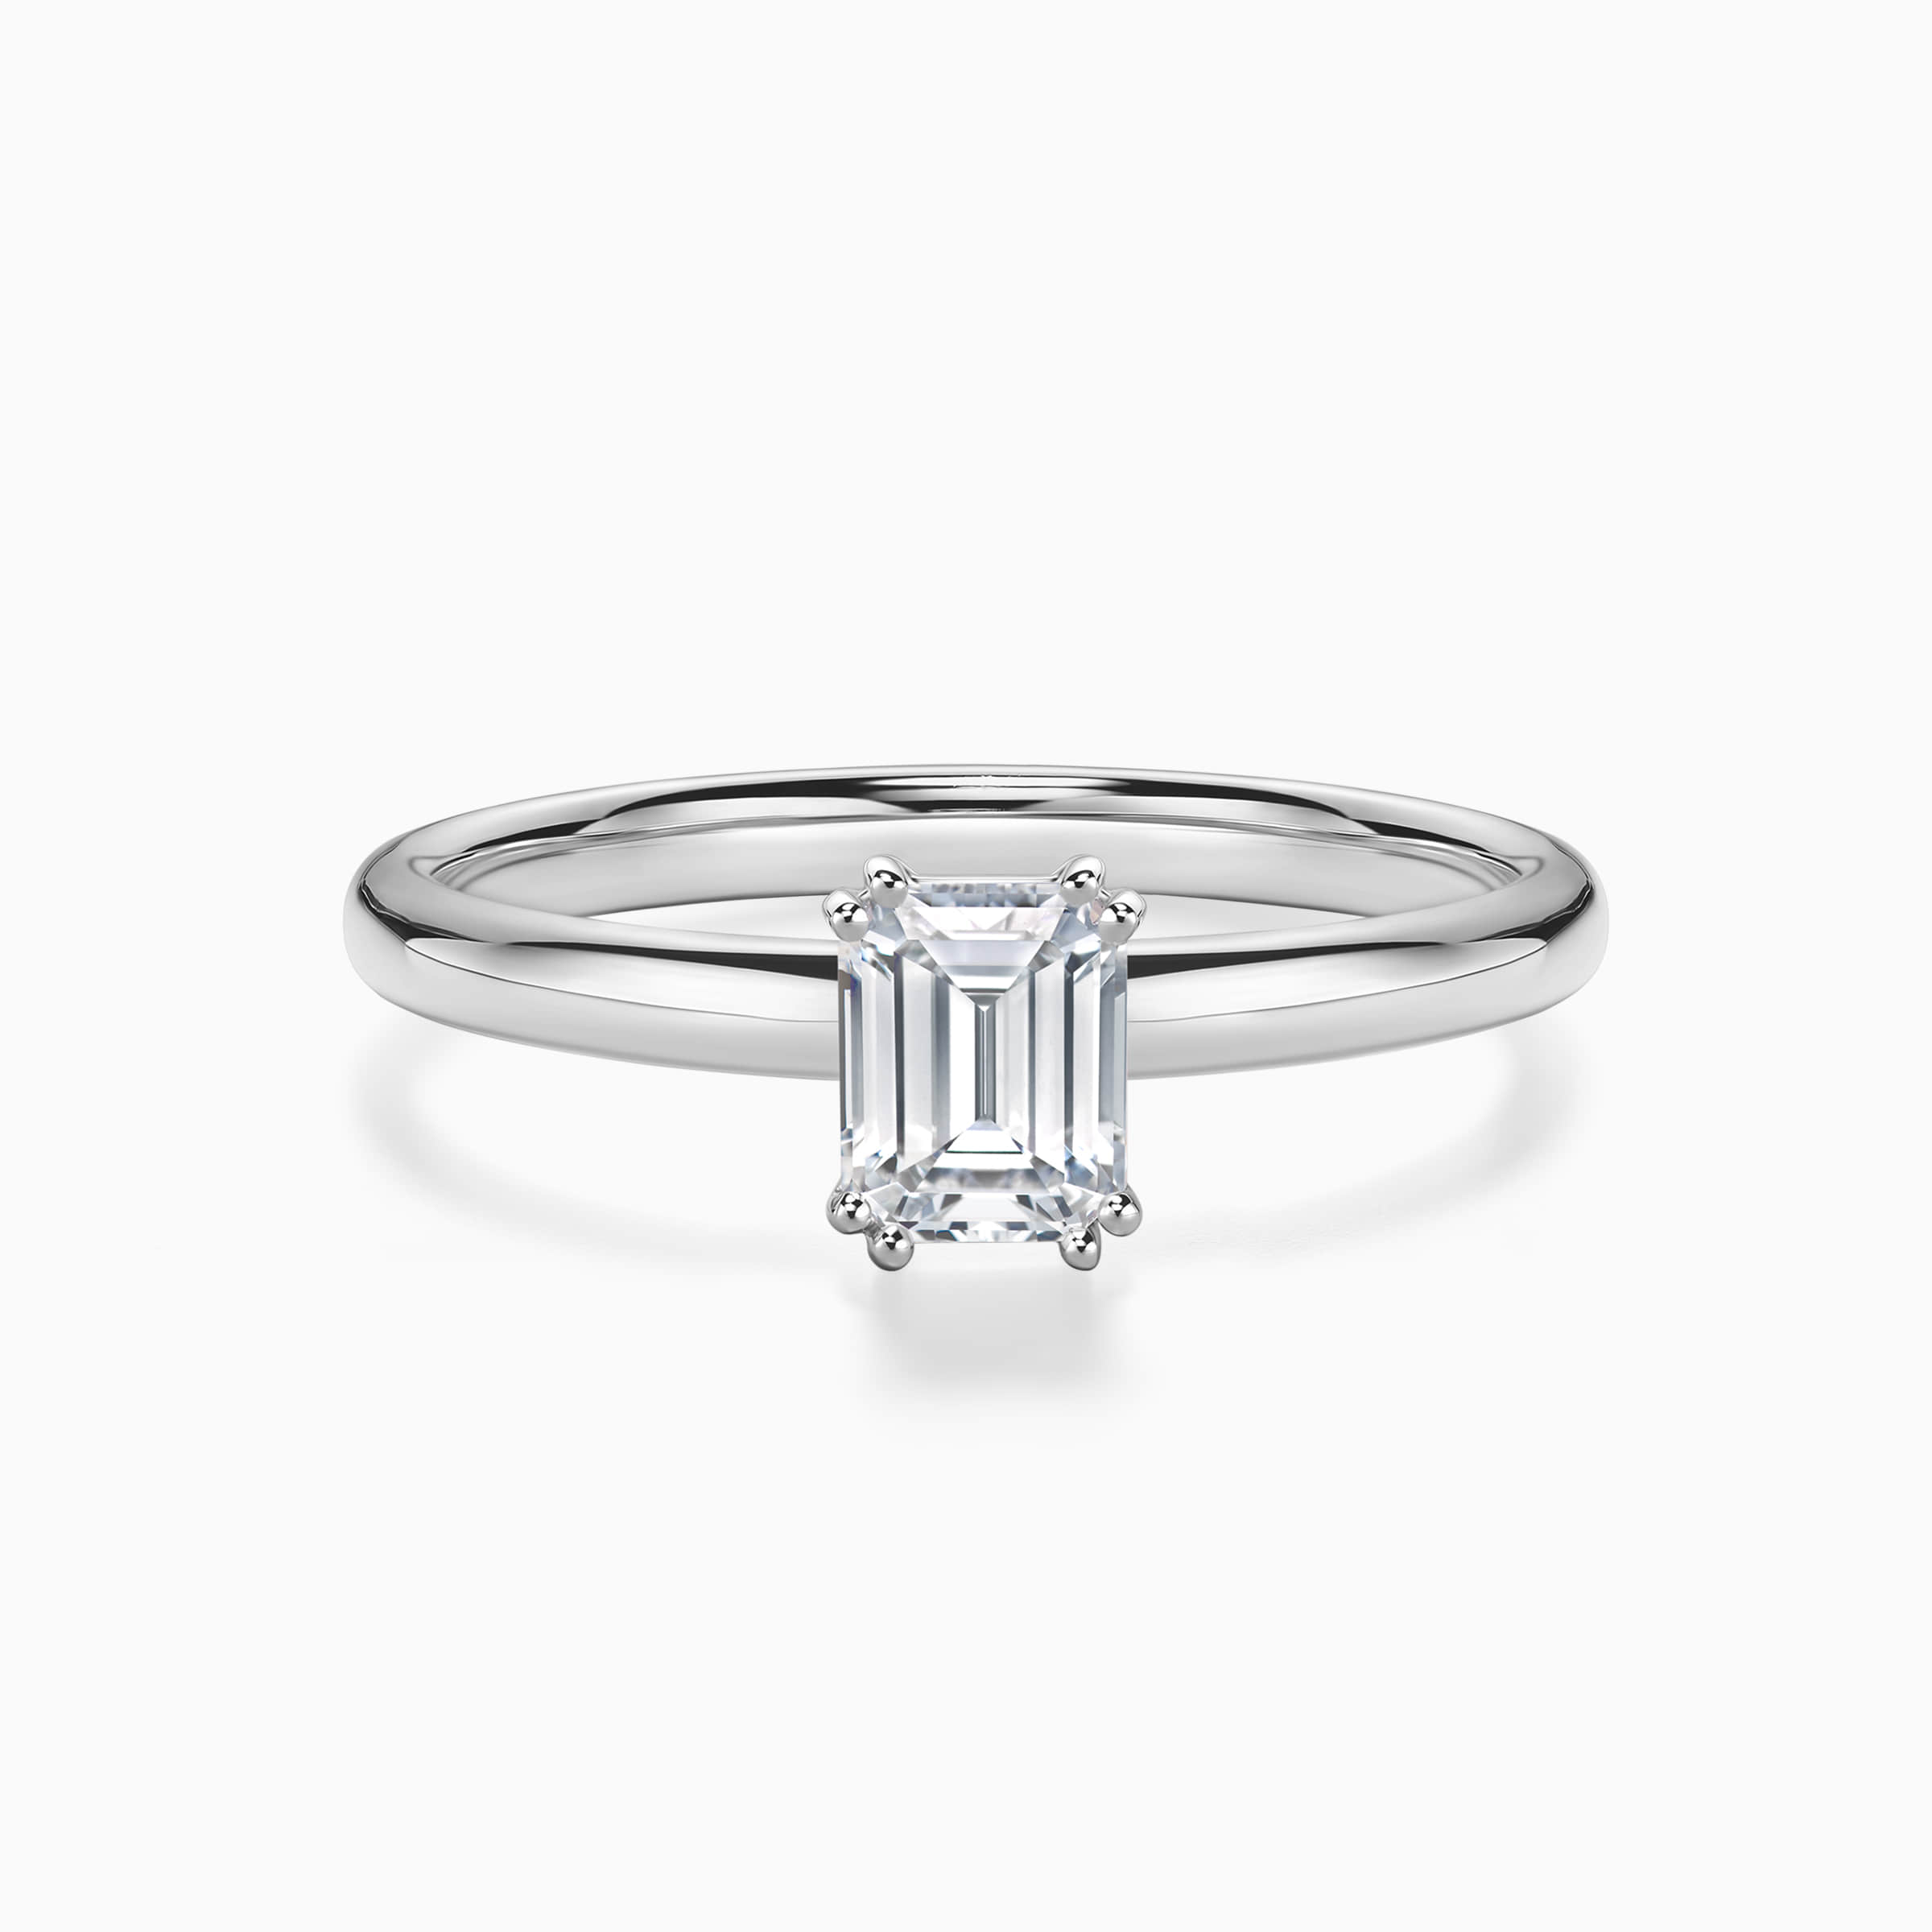 Darry Ring 2 carat emerald cut diamond engagement ring